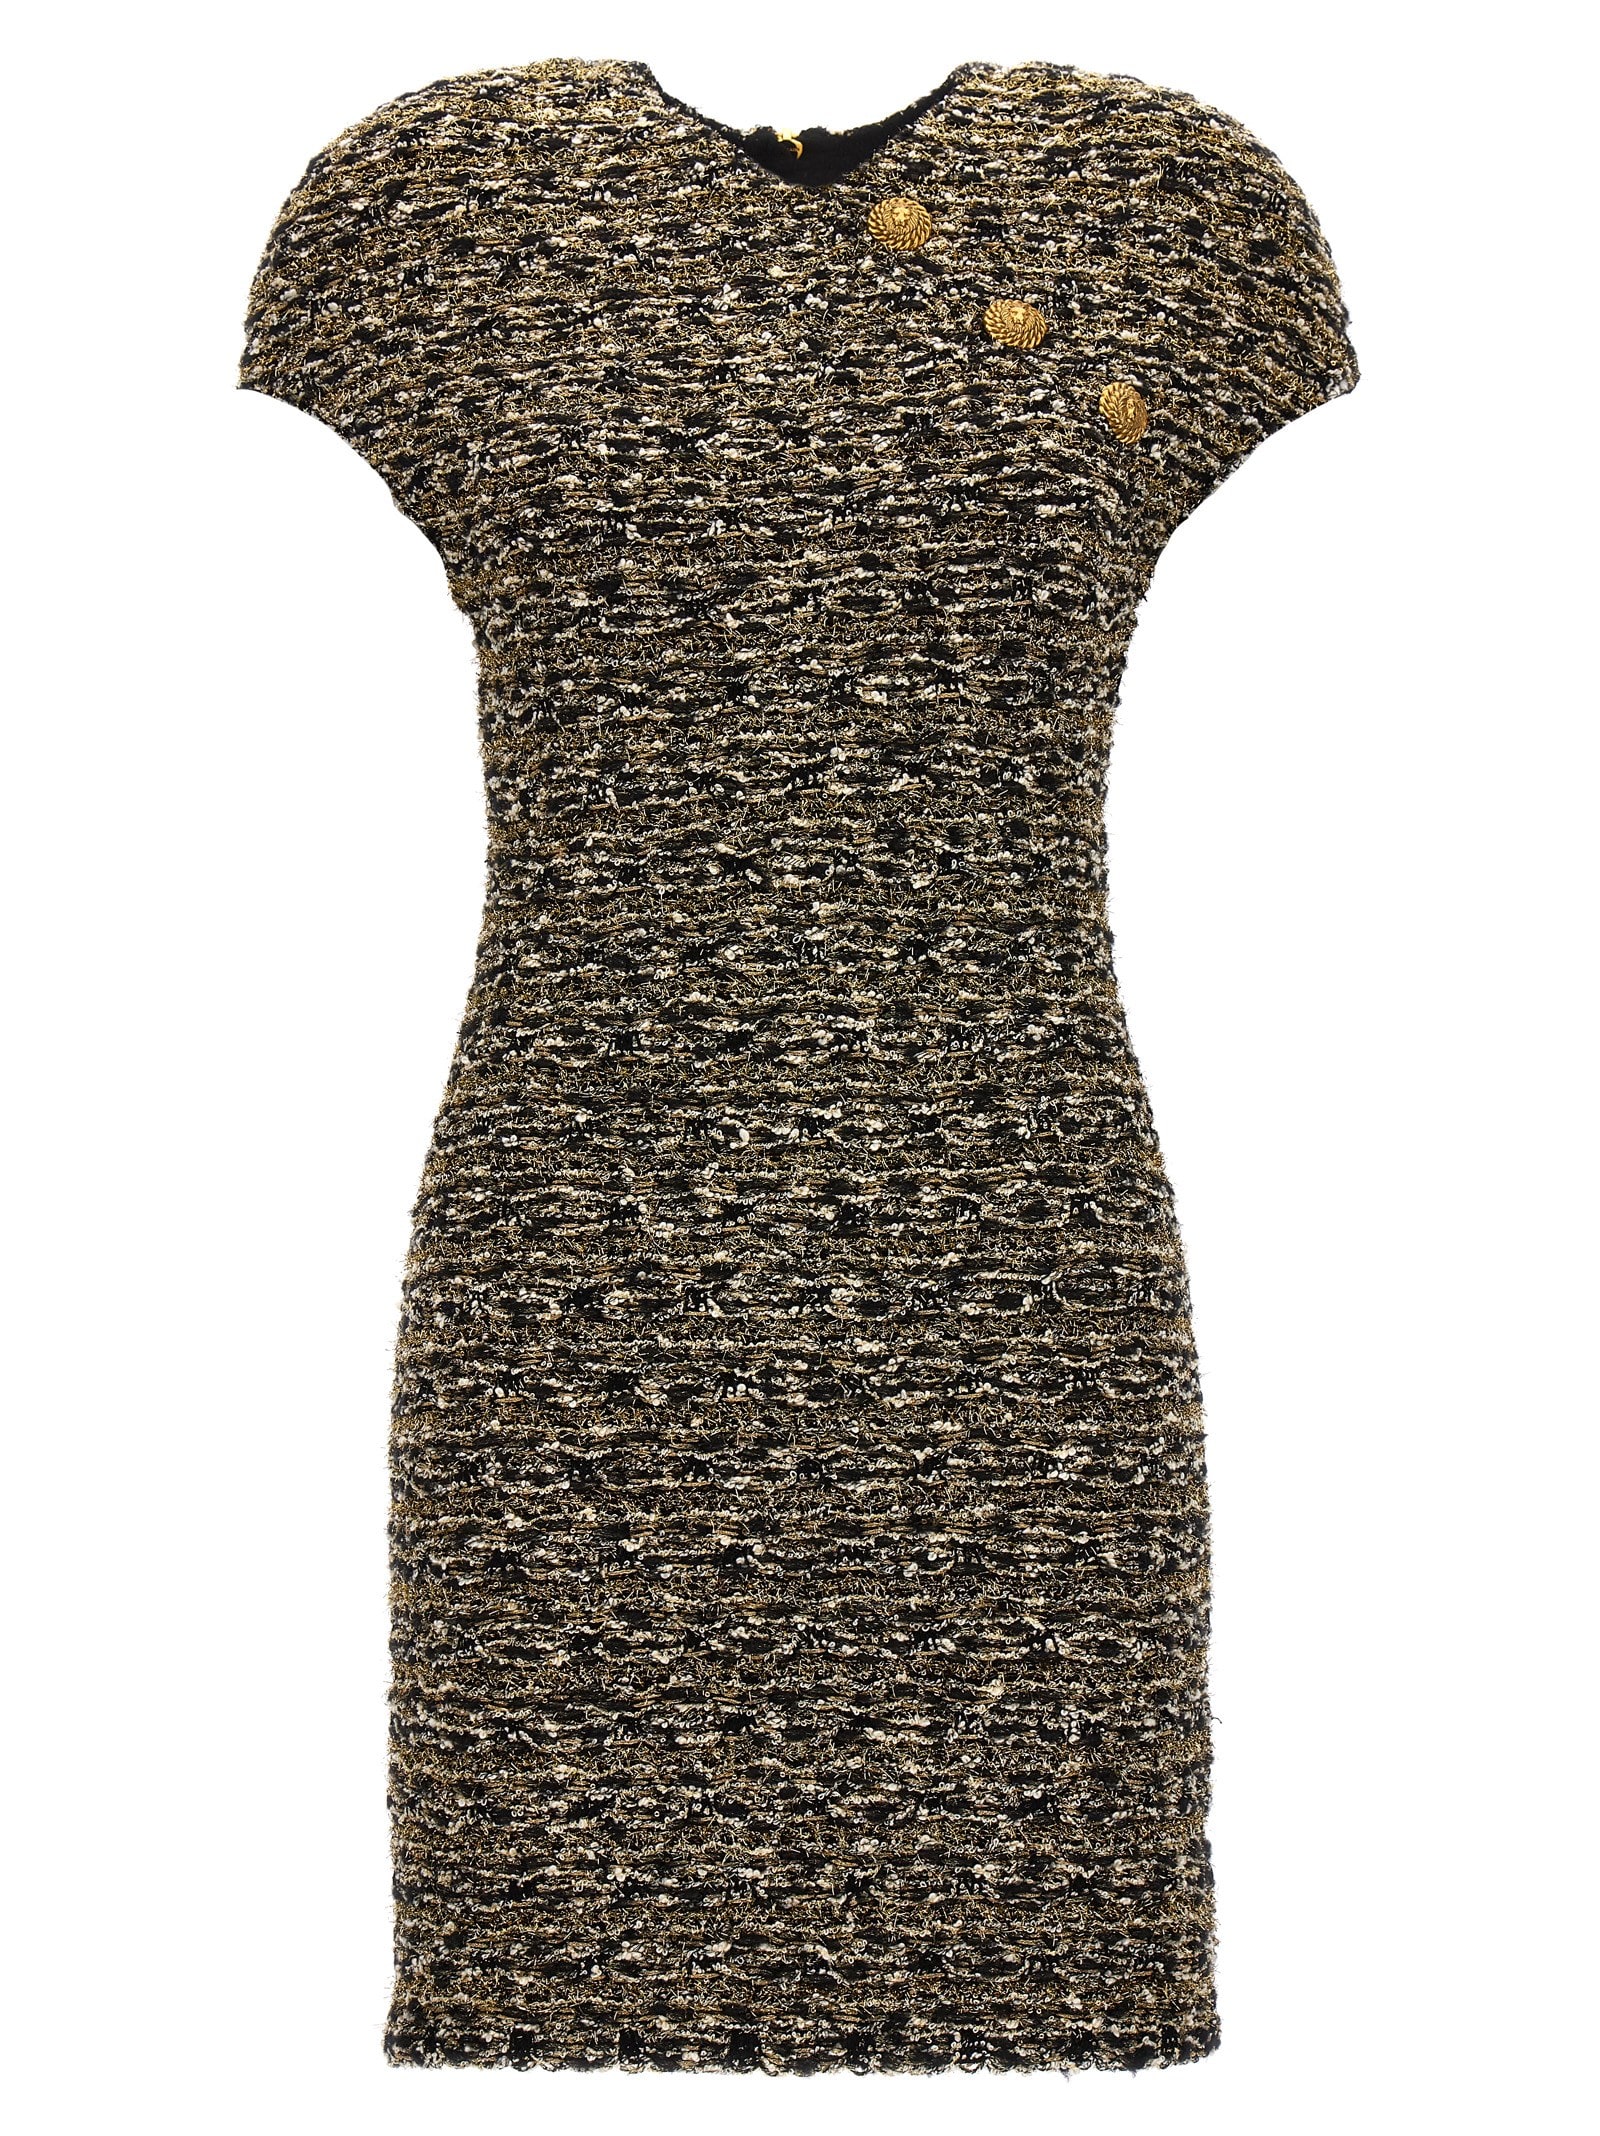 Balmain Tweed Dress